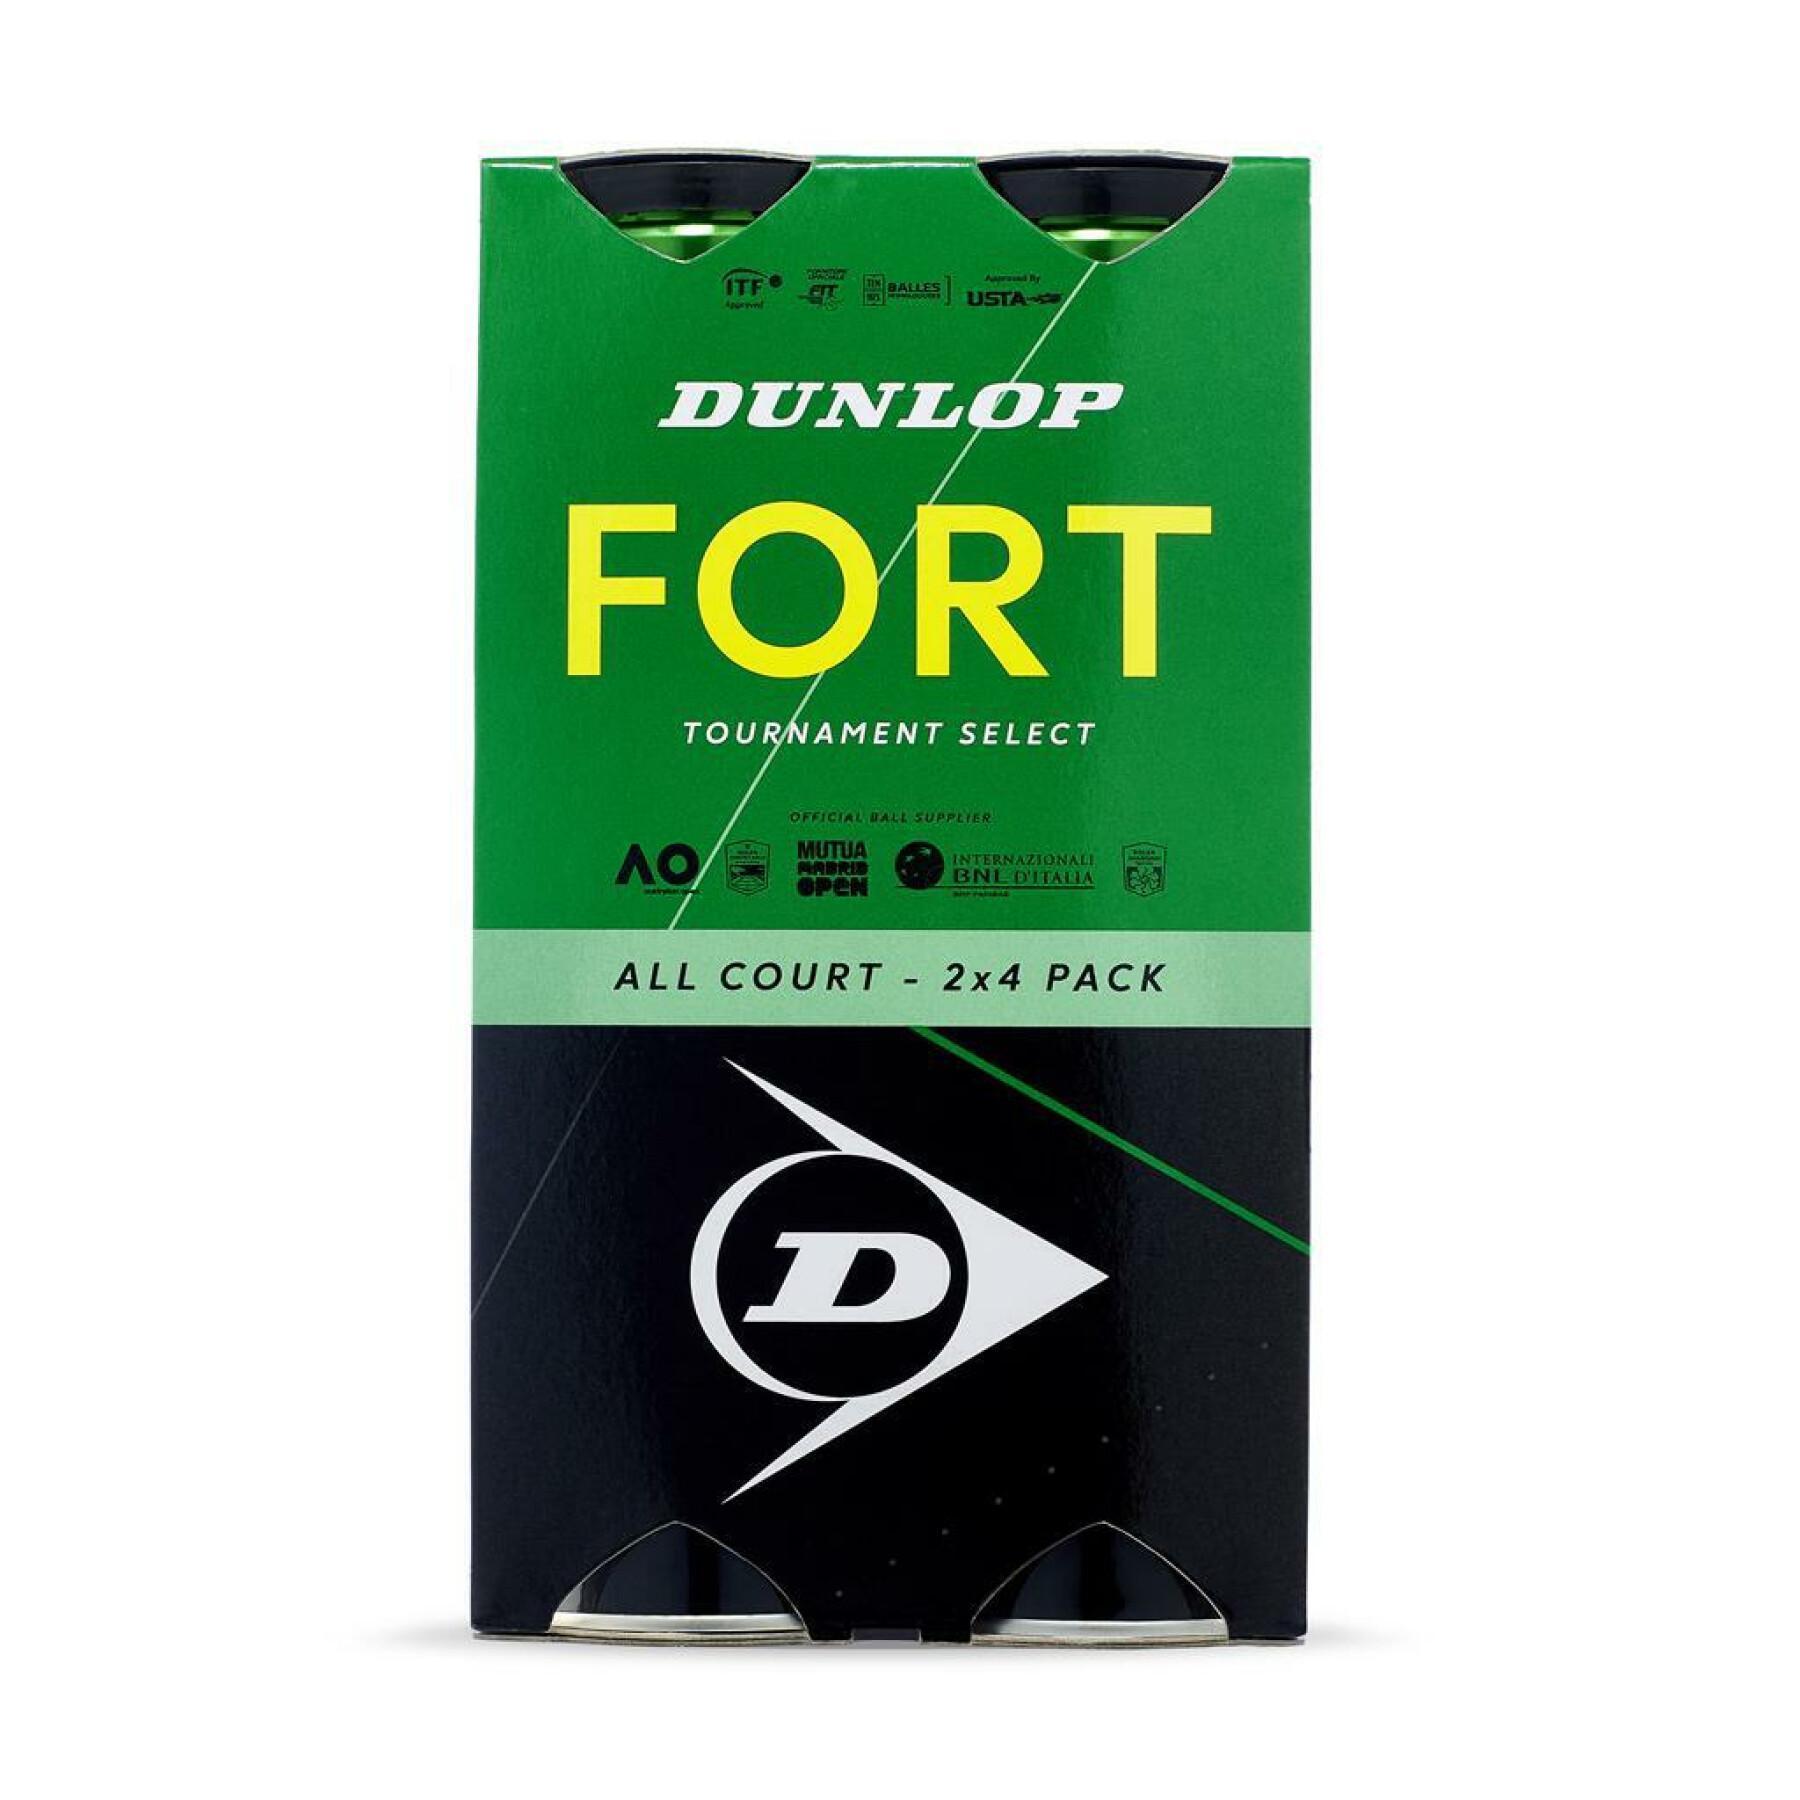 Conjunto de 2 tubos de 4 bolas de ténis Dunlop fort all court